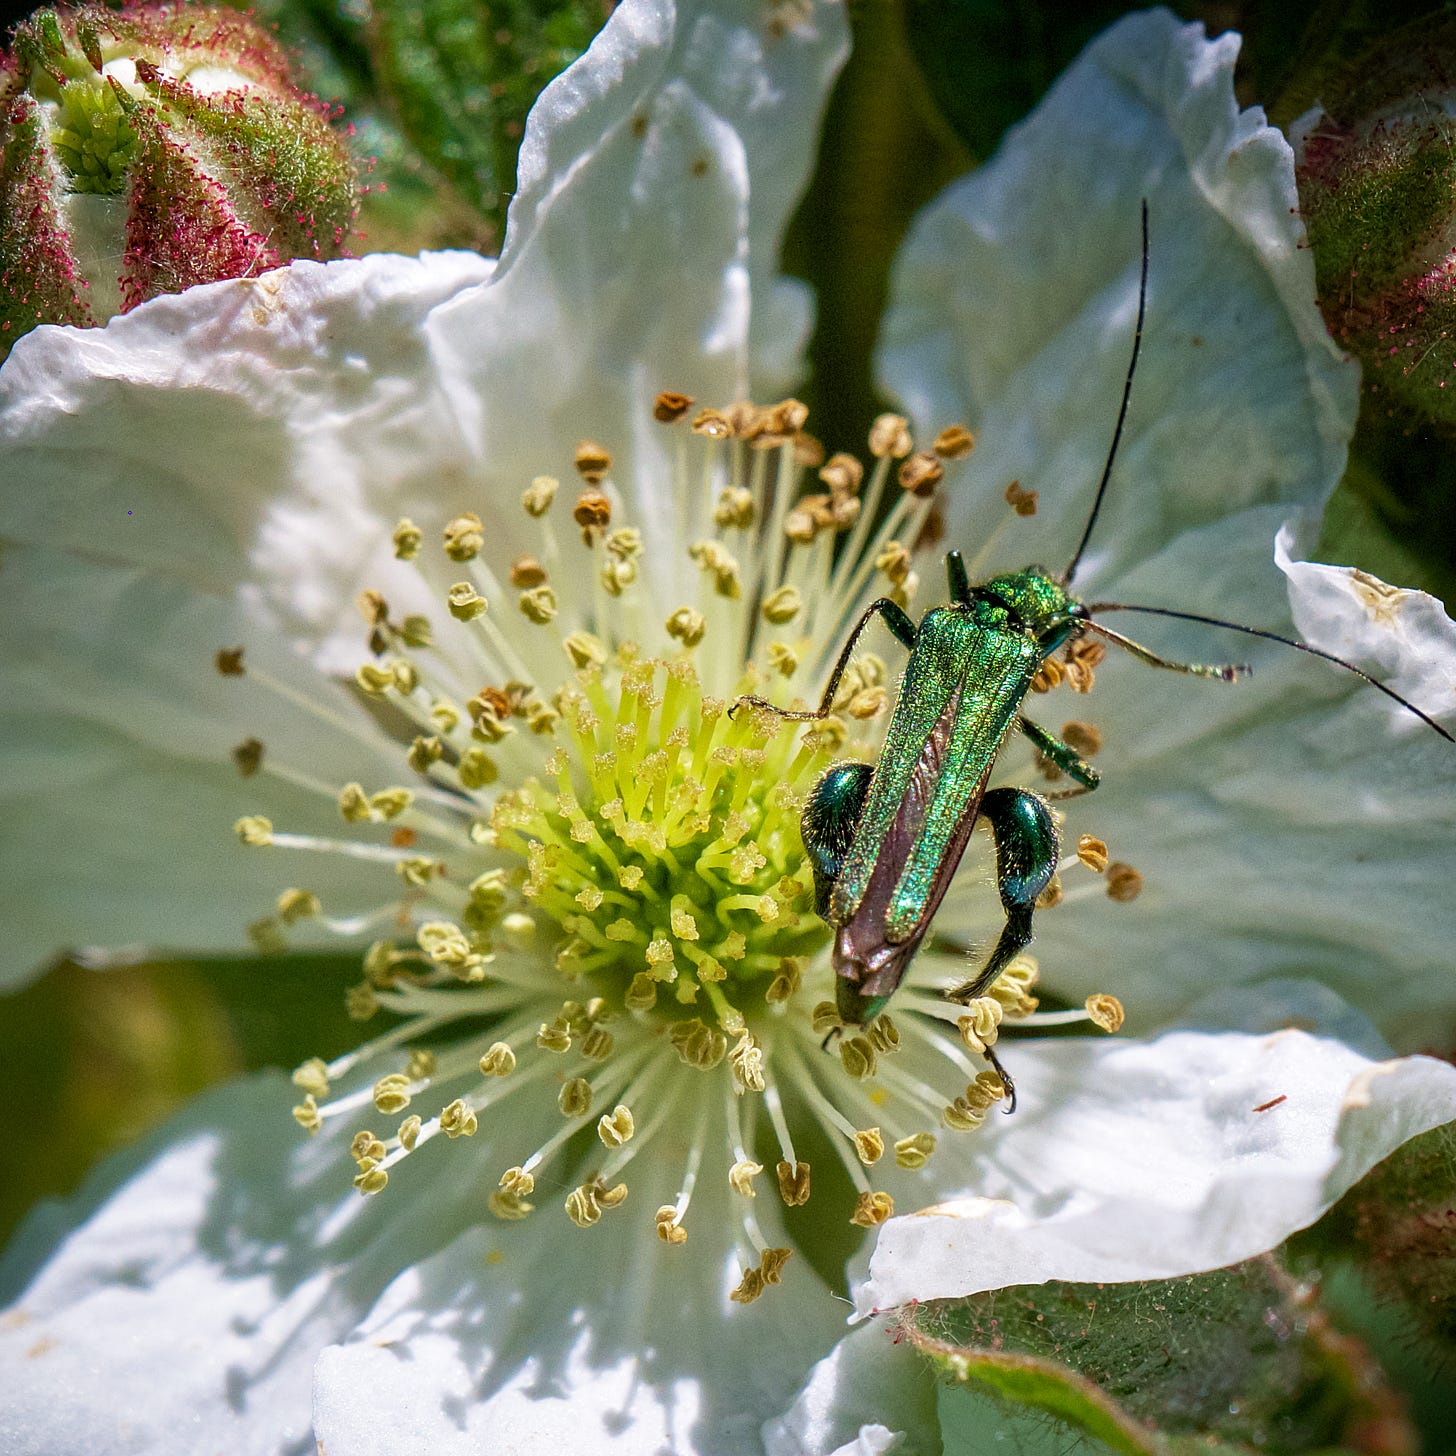 Thick-legged Flower Beetle on bramble flower,